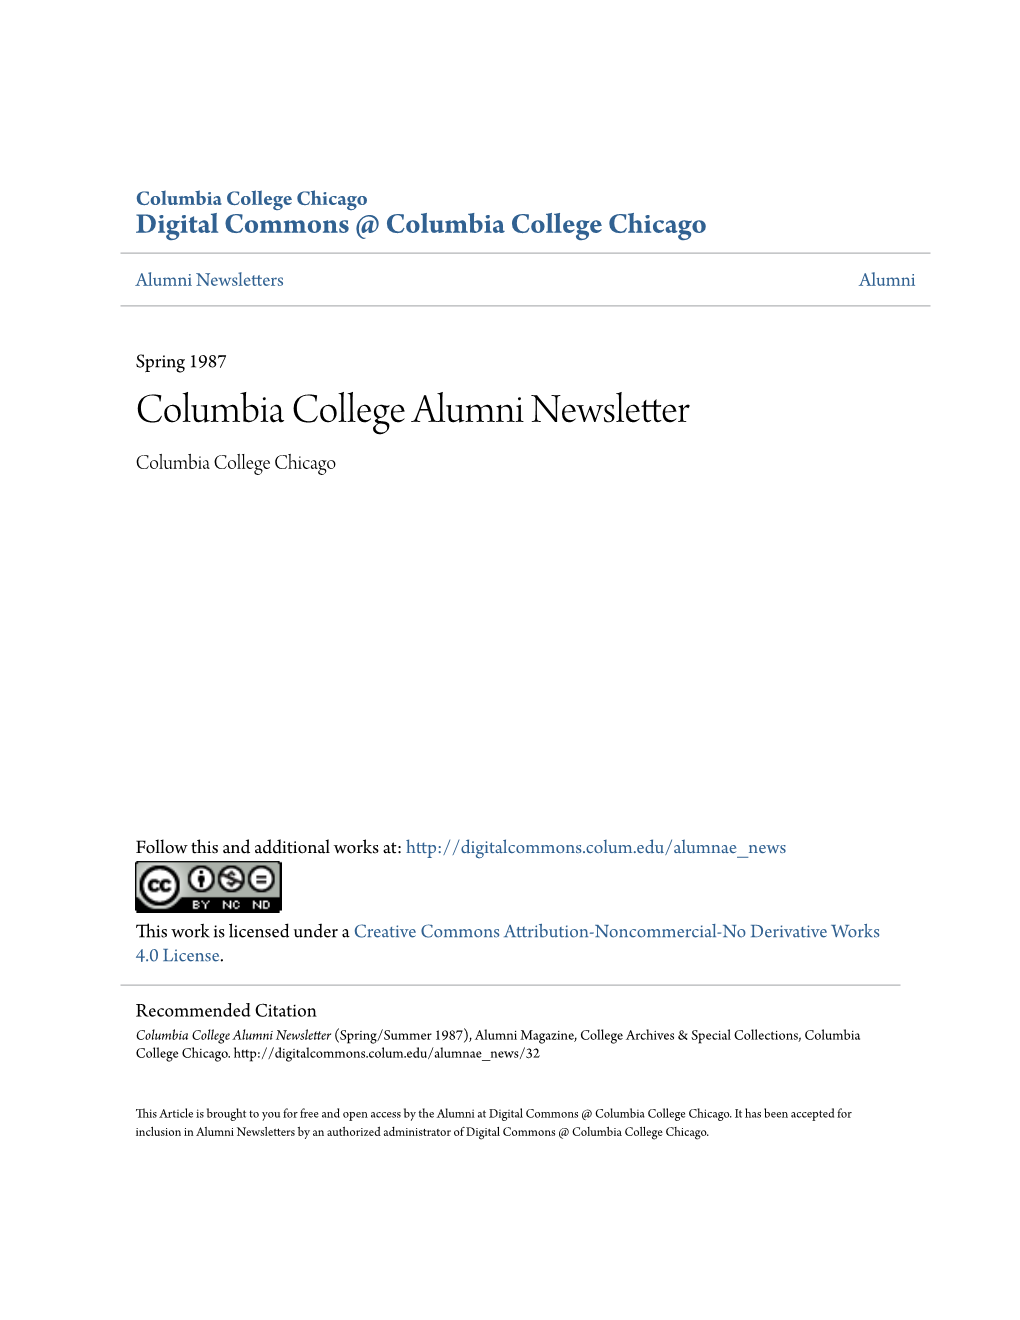 Columbia College Alumni Newsletter Columbia College Chicago